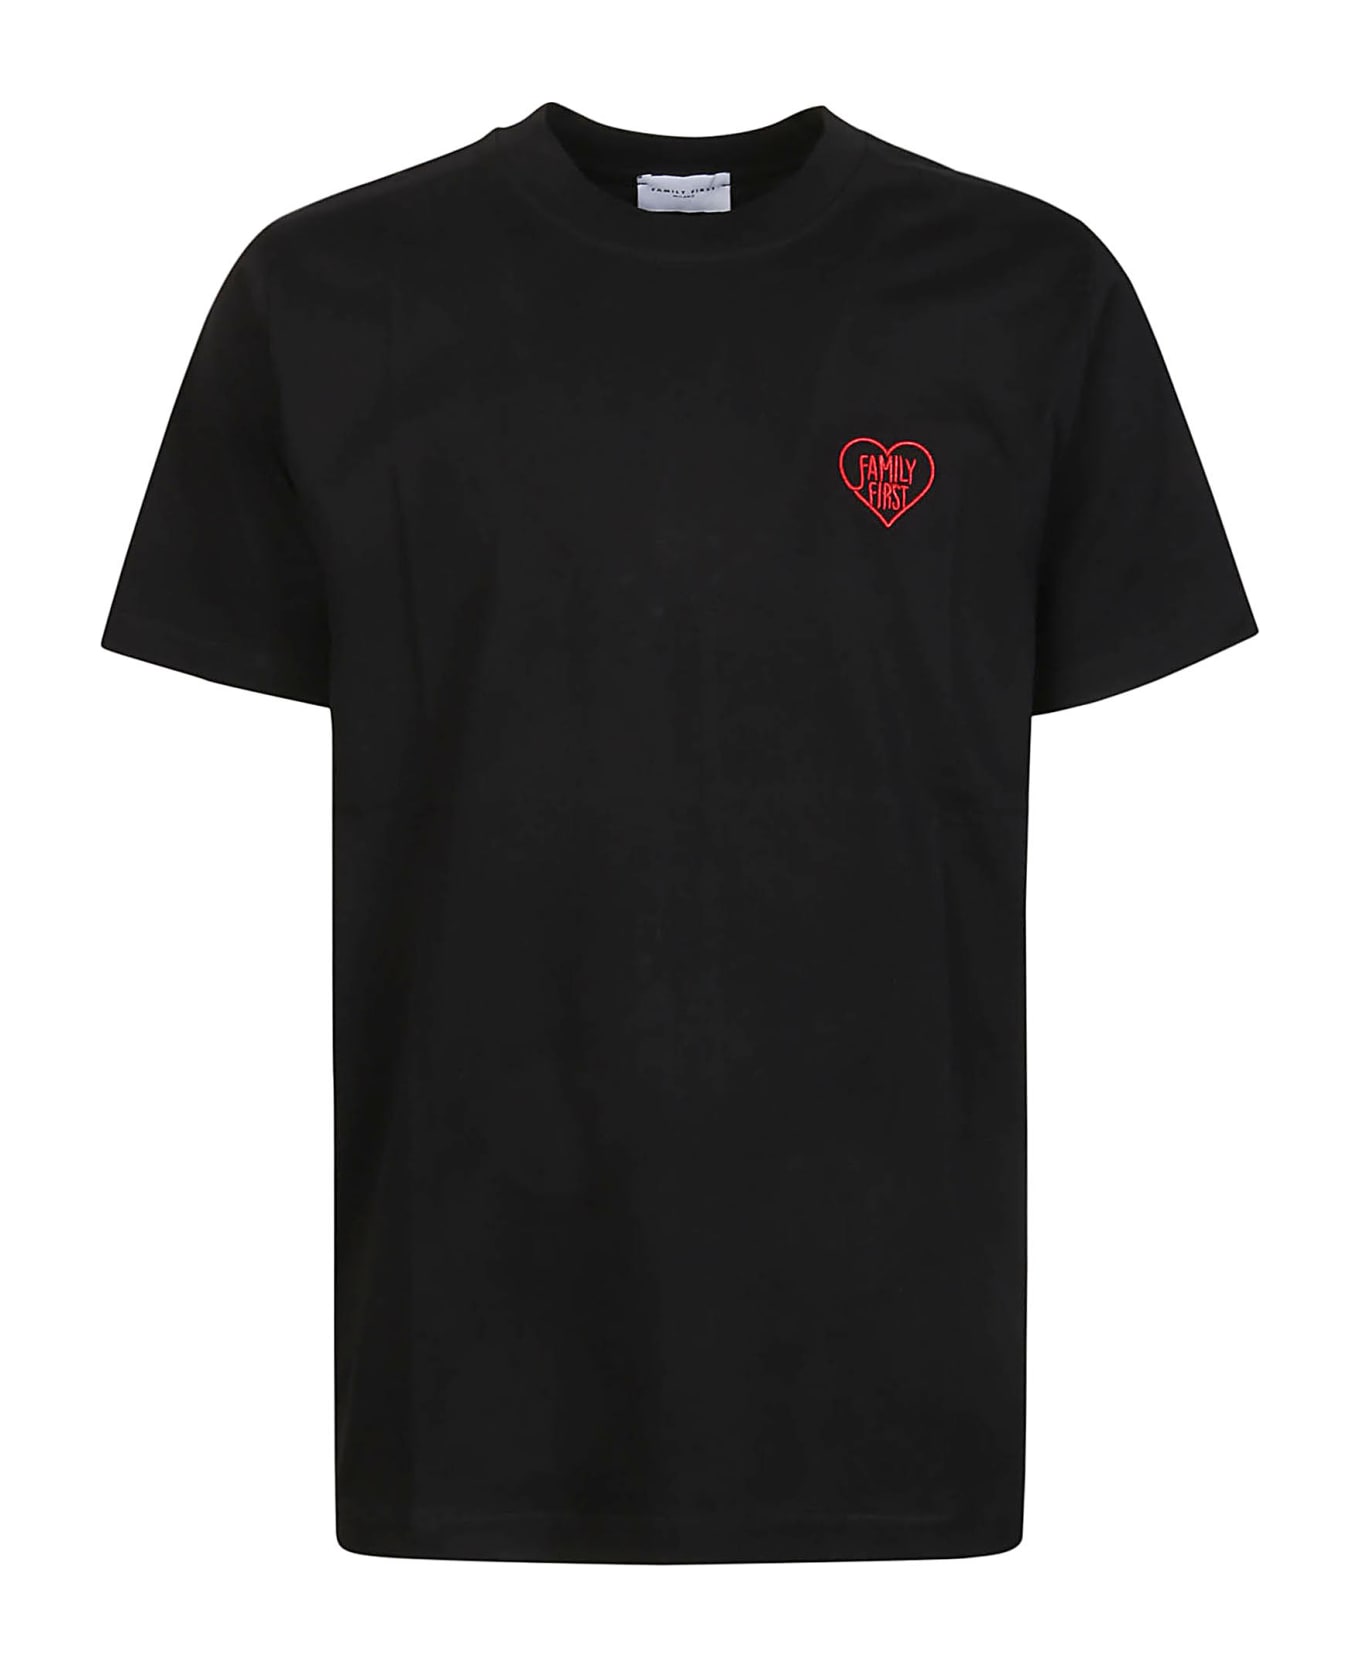 Family First Milano Heart T-shirt - Black